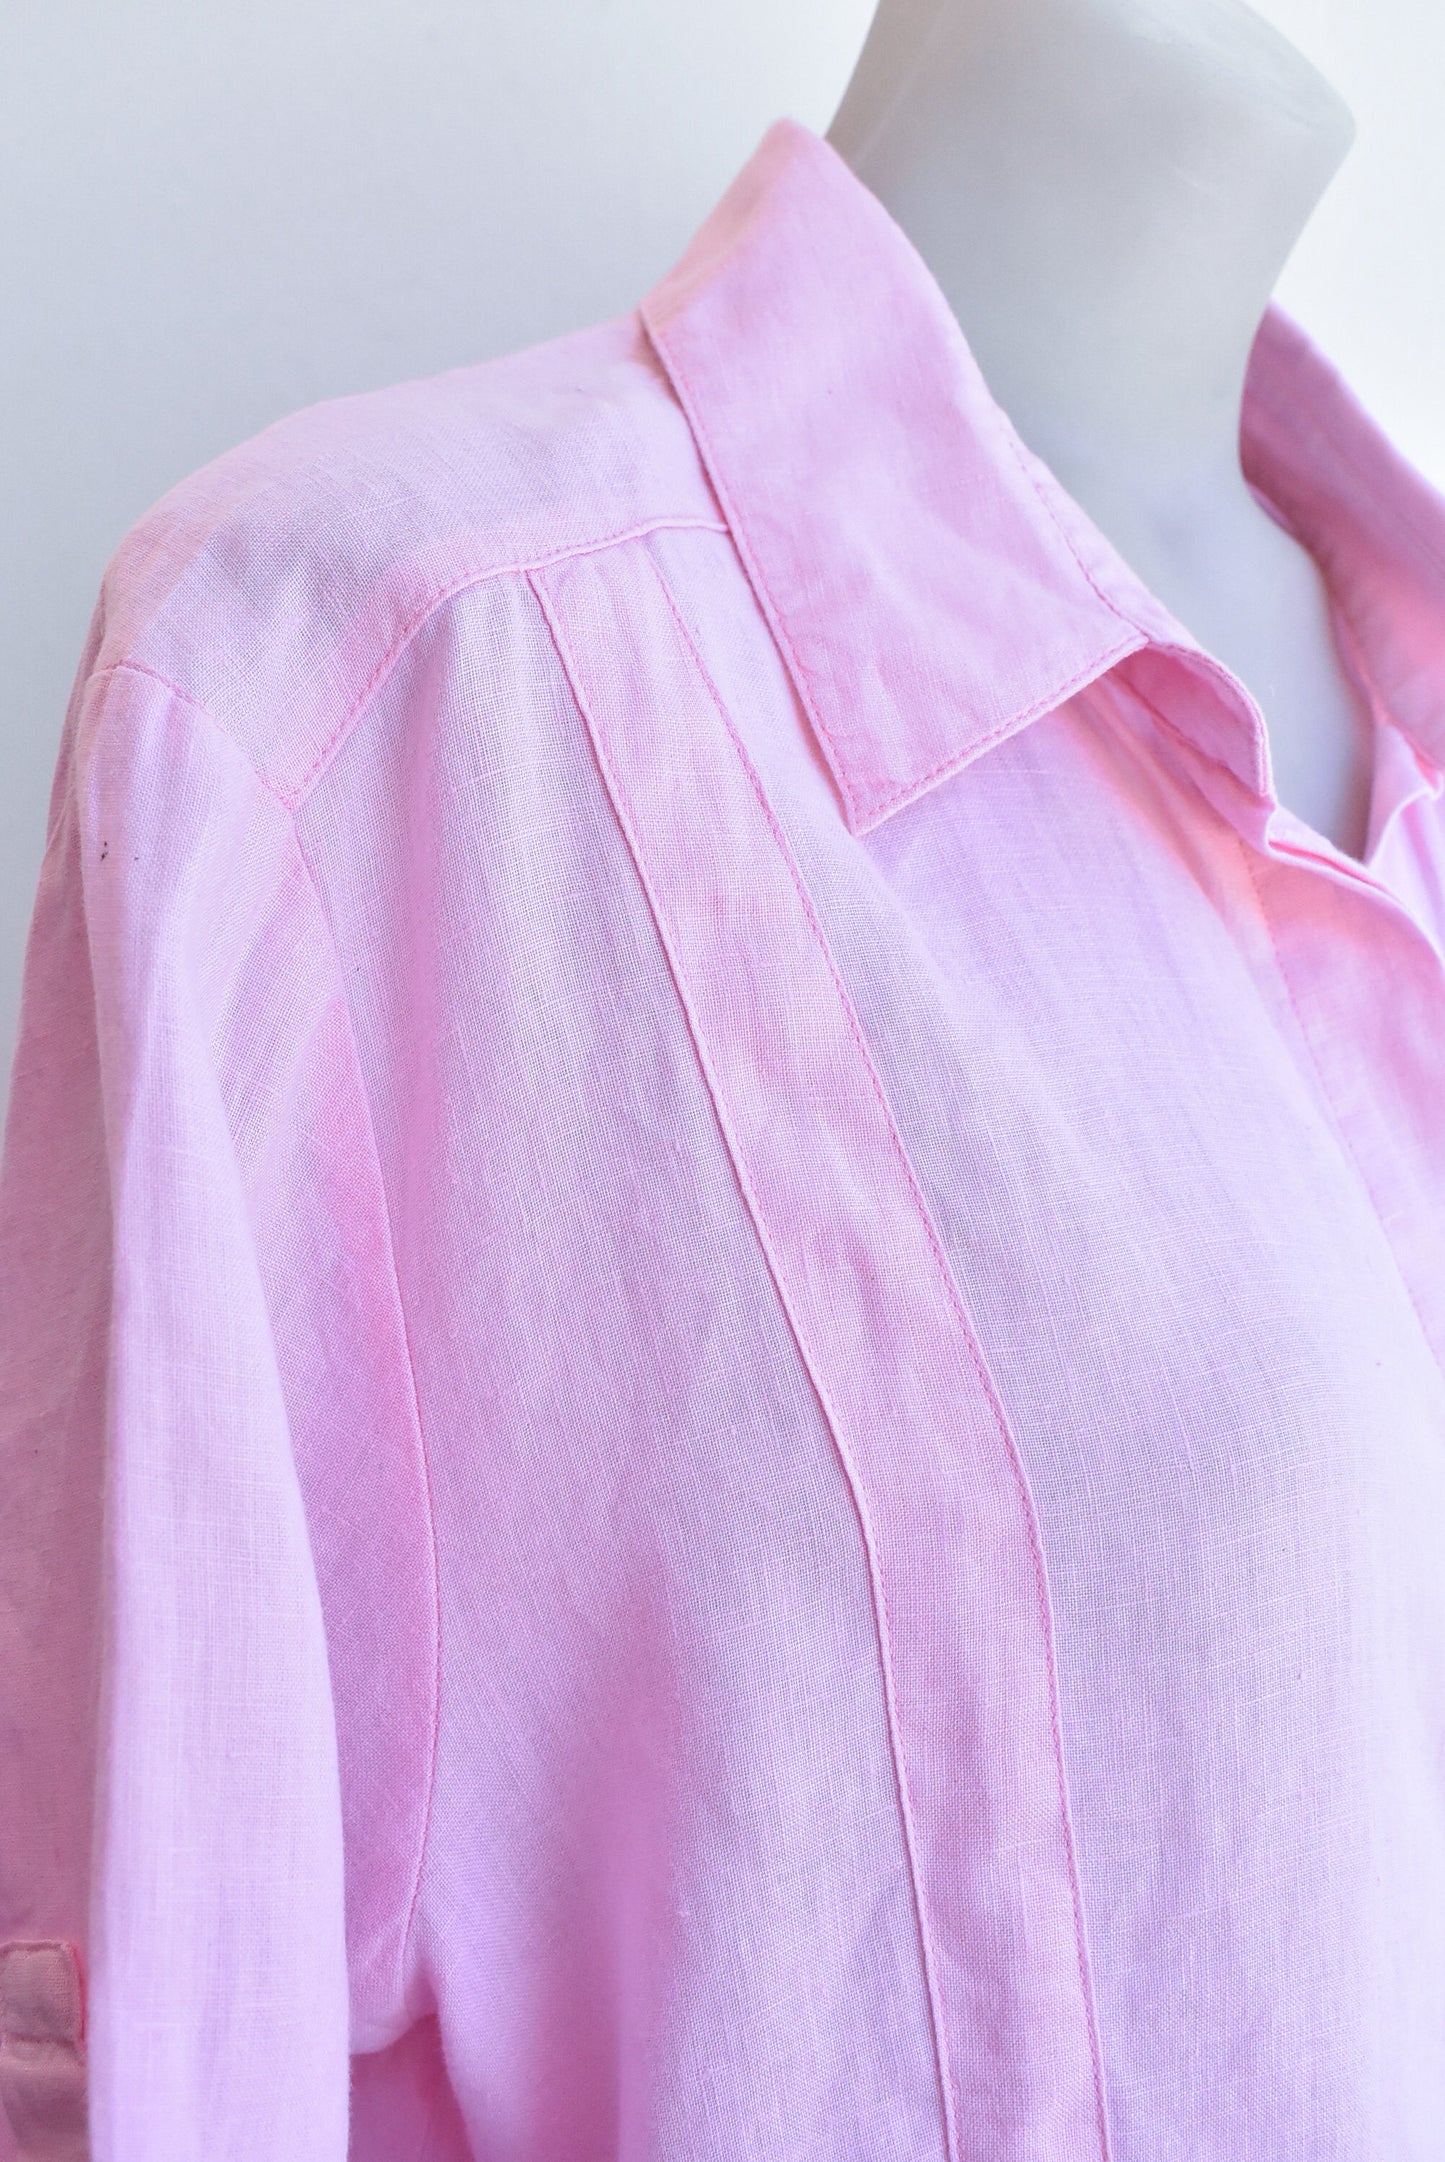 Yarra Trail pink 100% linen top, size L